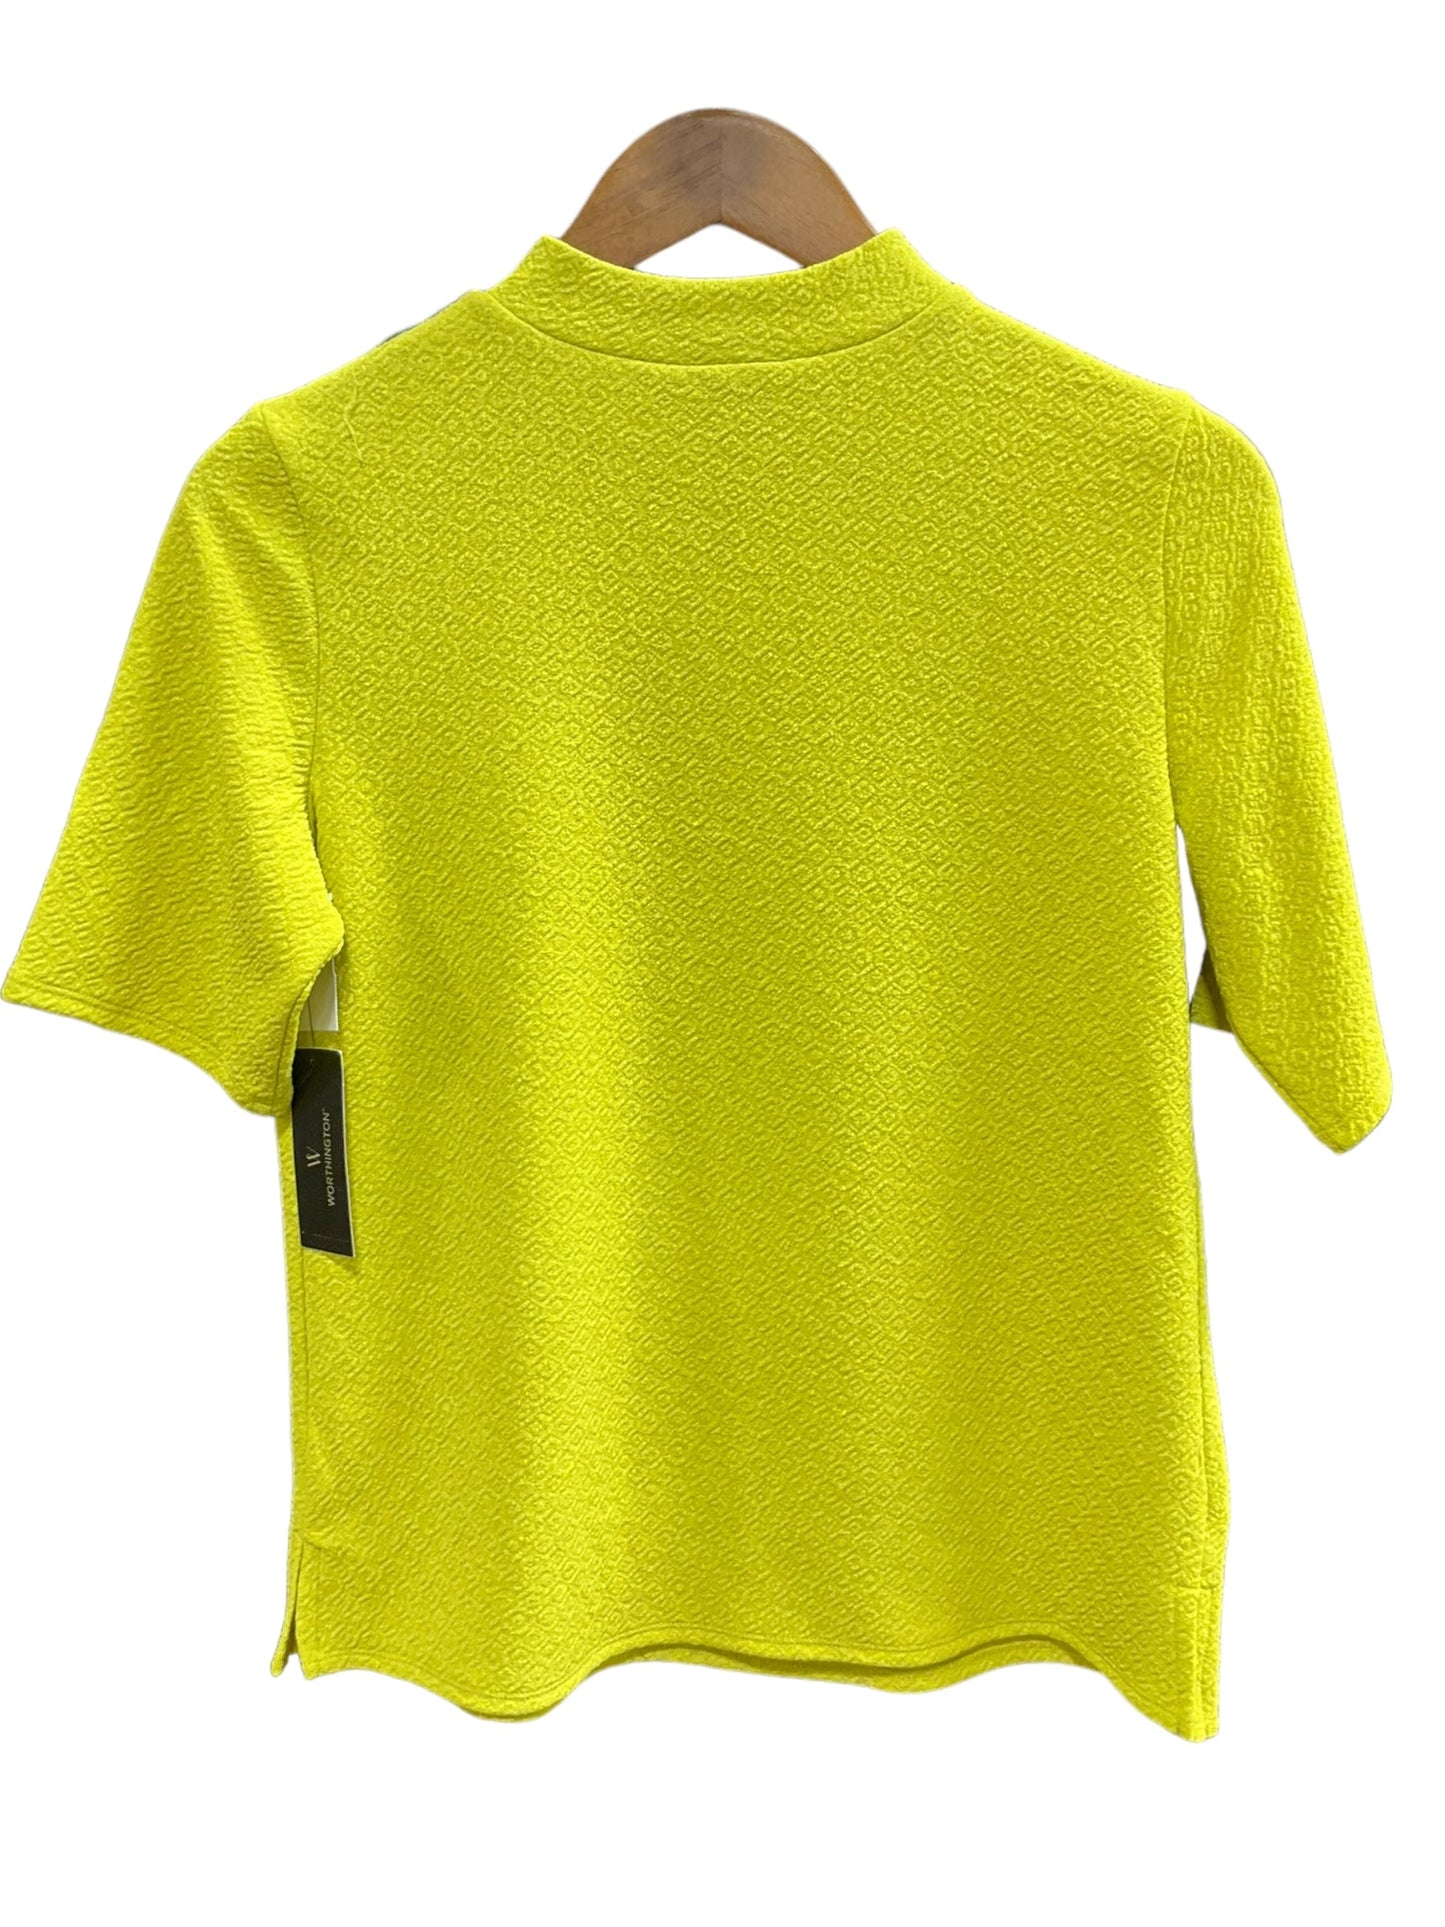 Yellow Top Short Sleeve Worthington, Size M